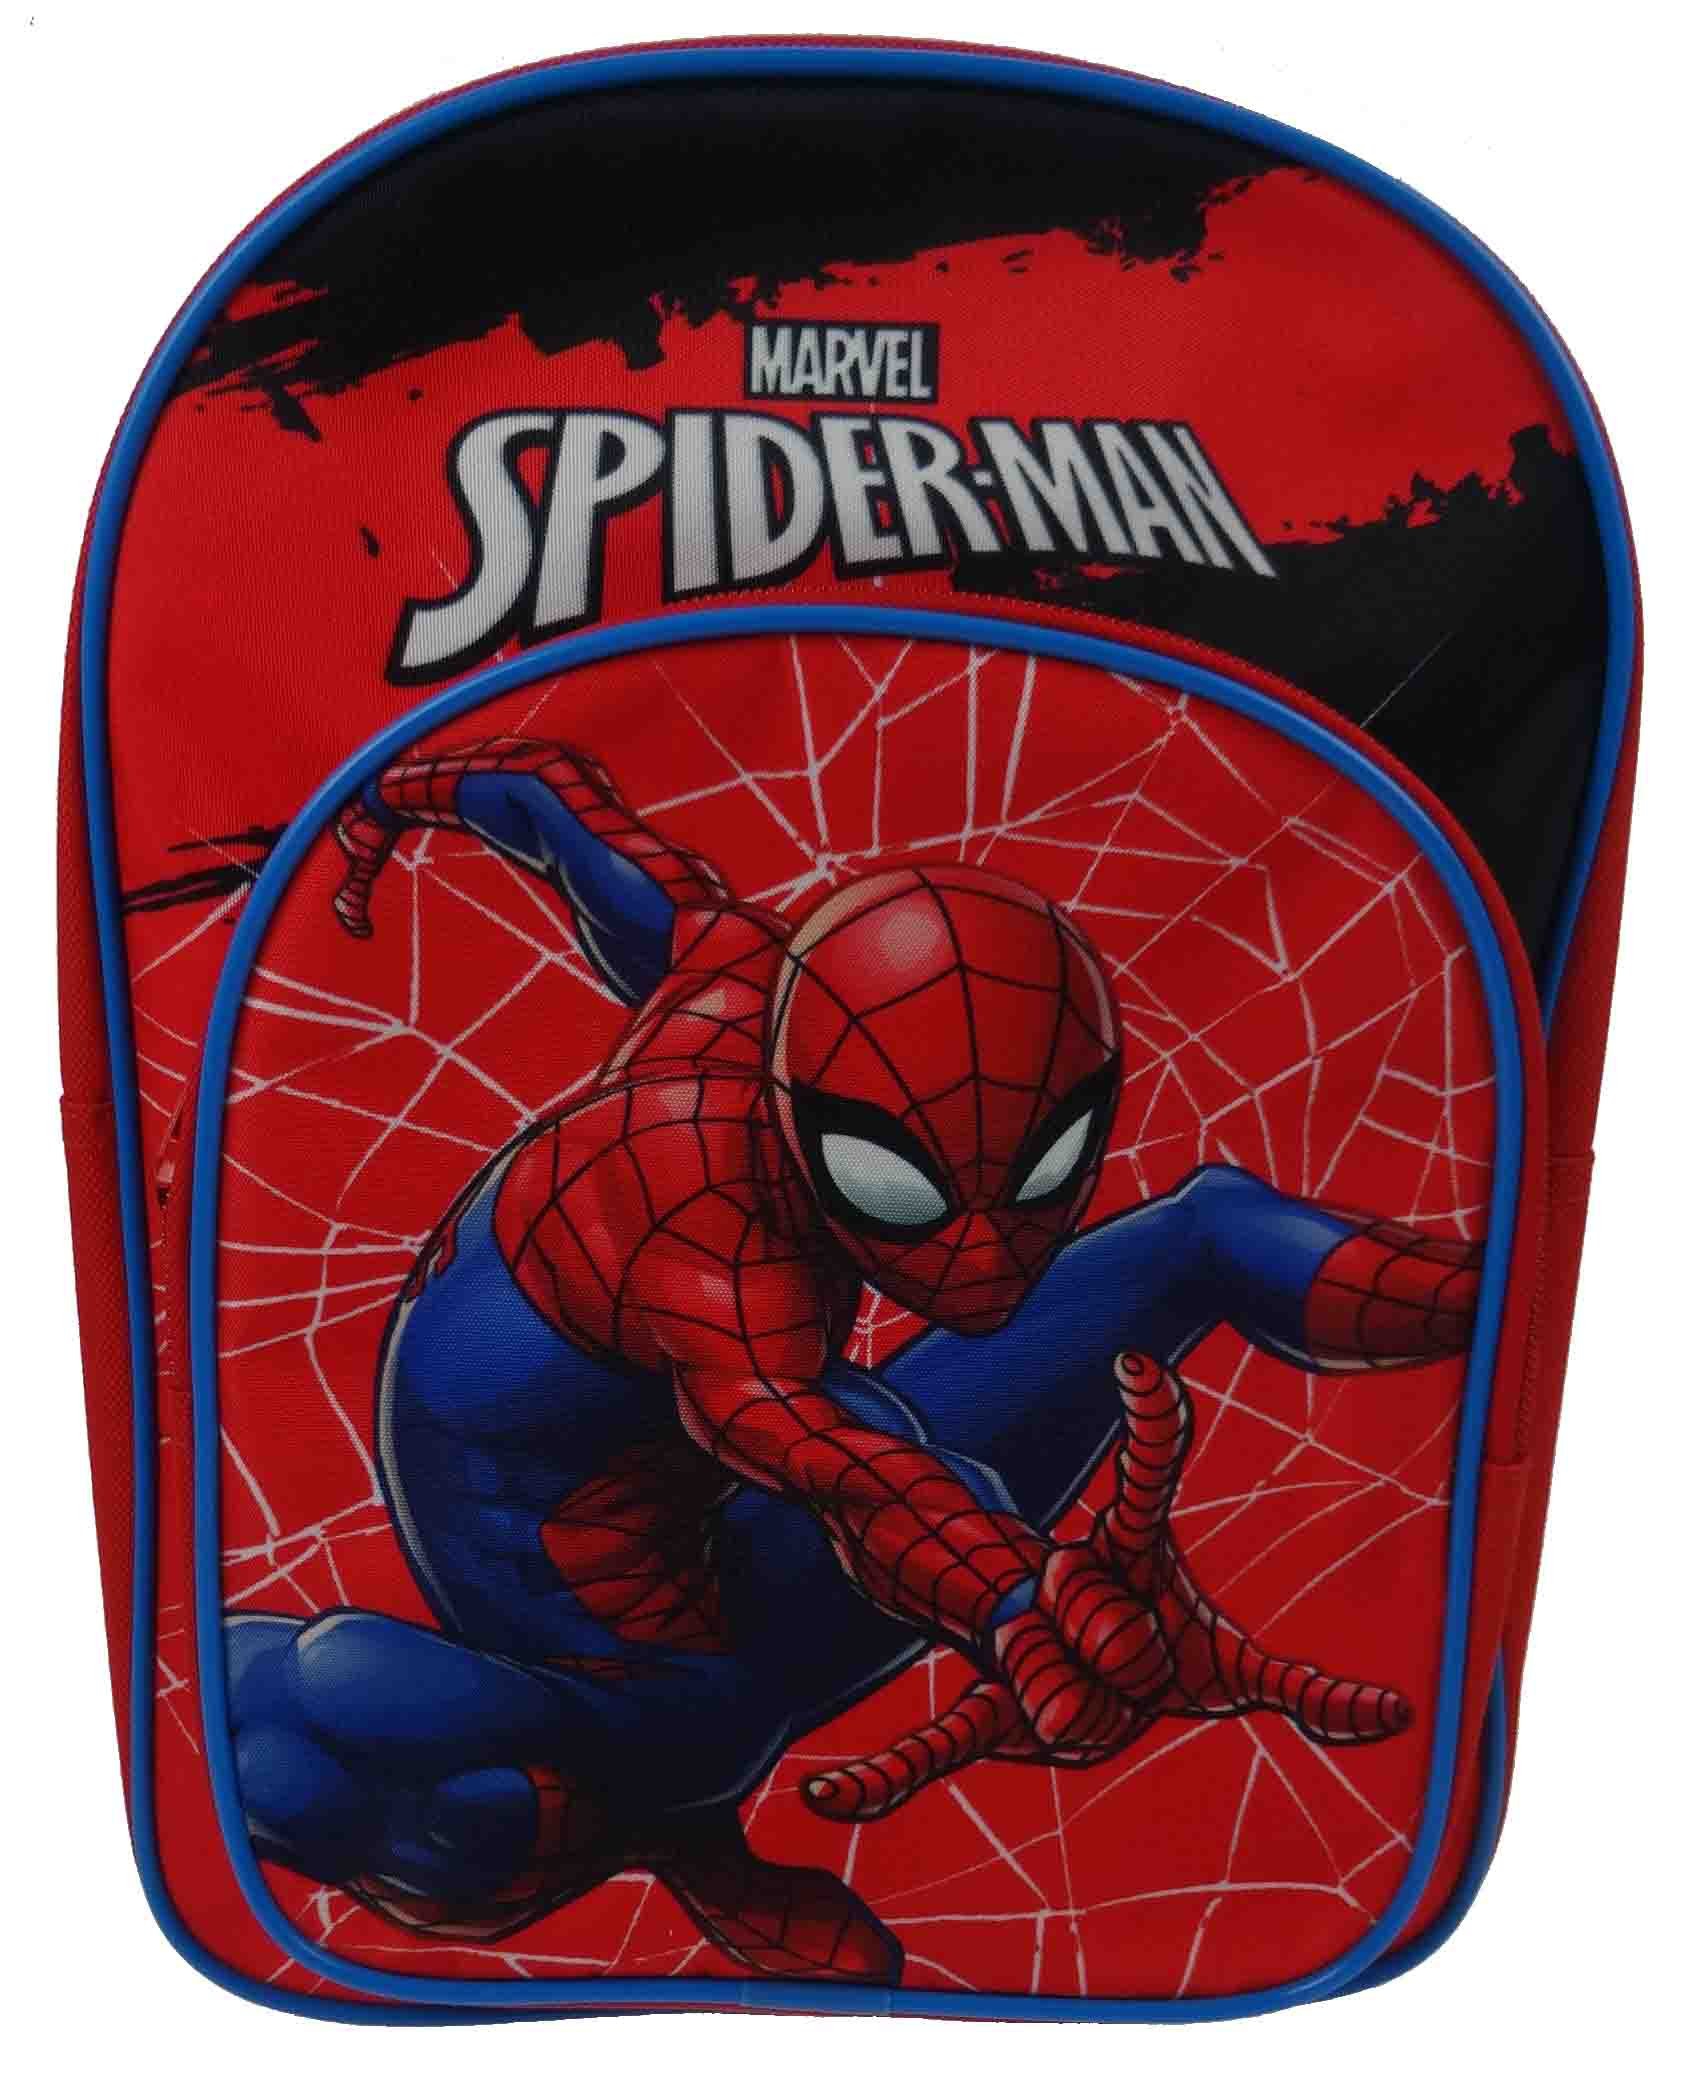 Spiderman Red Arch School Bag Rucksack Backpack